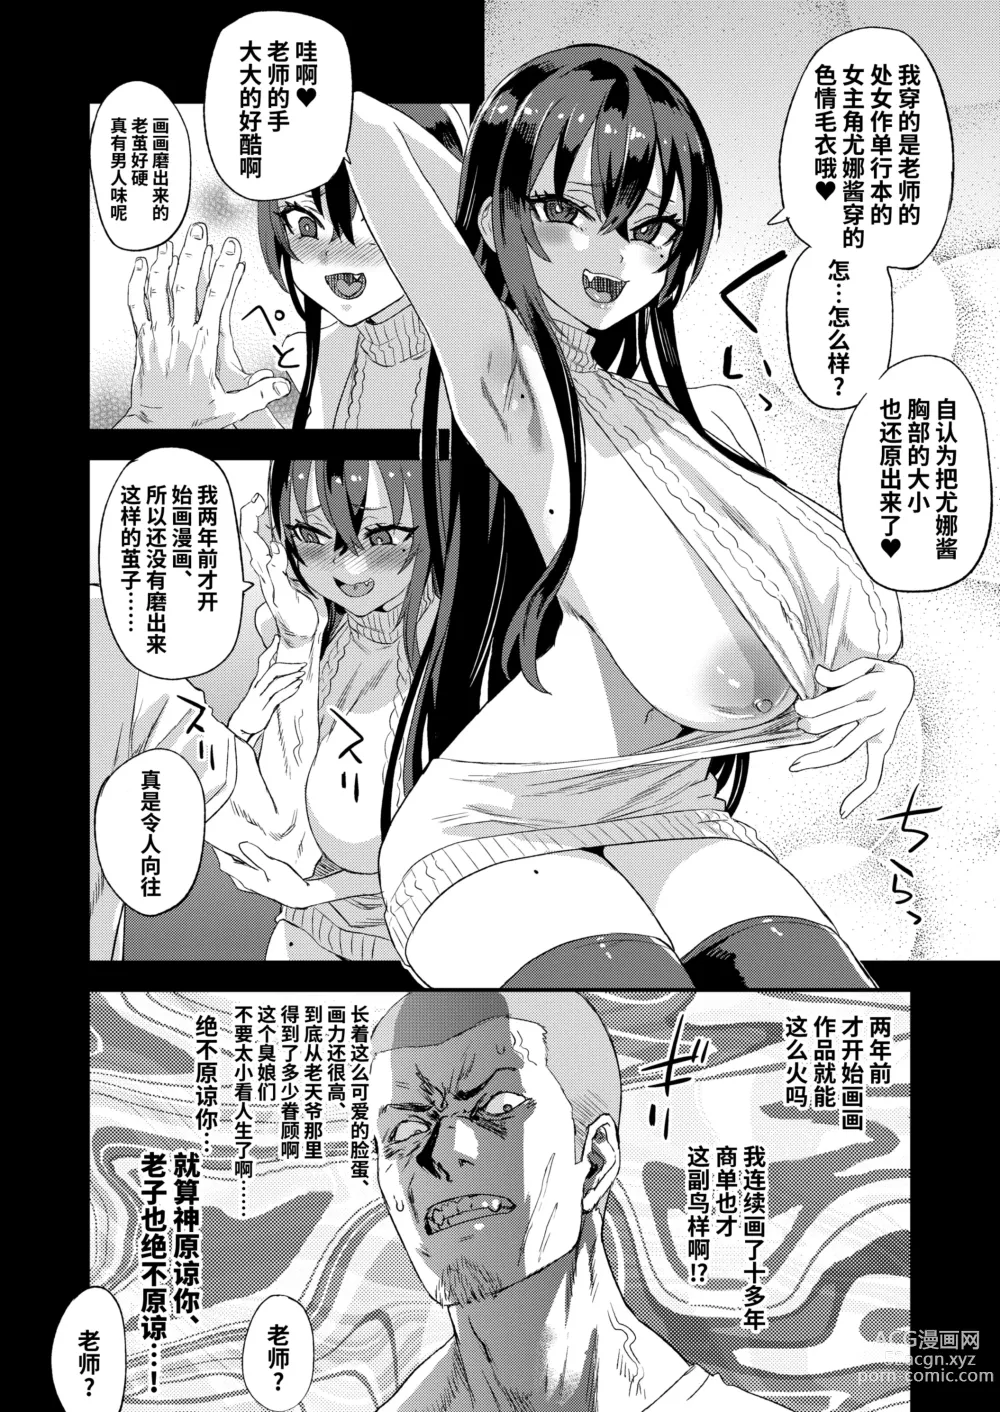 Page 8 of doujinshi 骑乘院老师的色情漫画脑